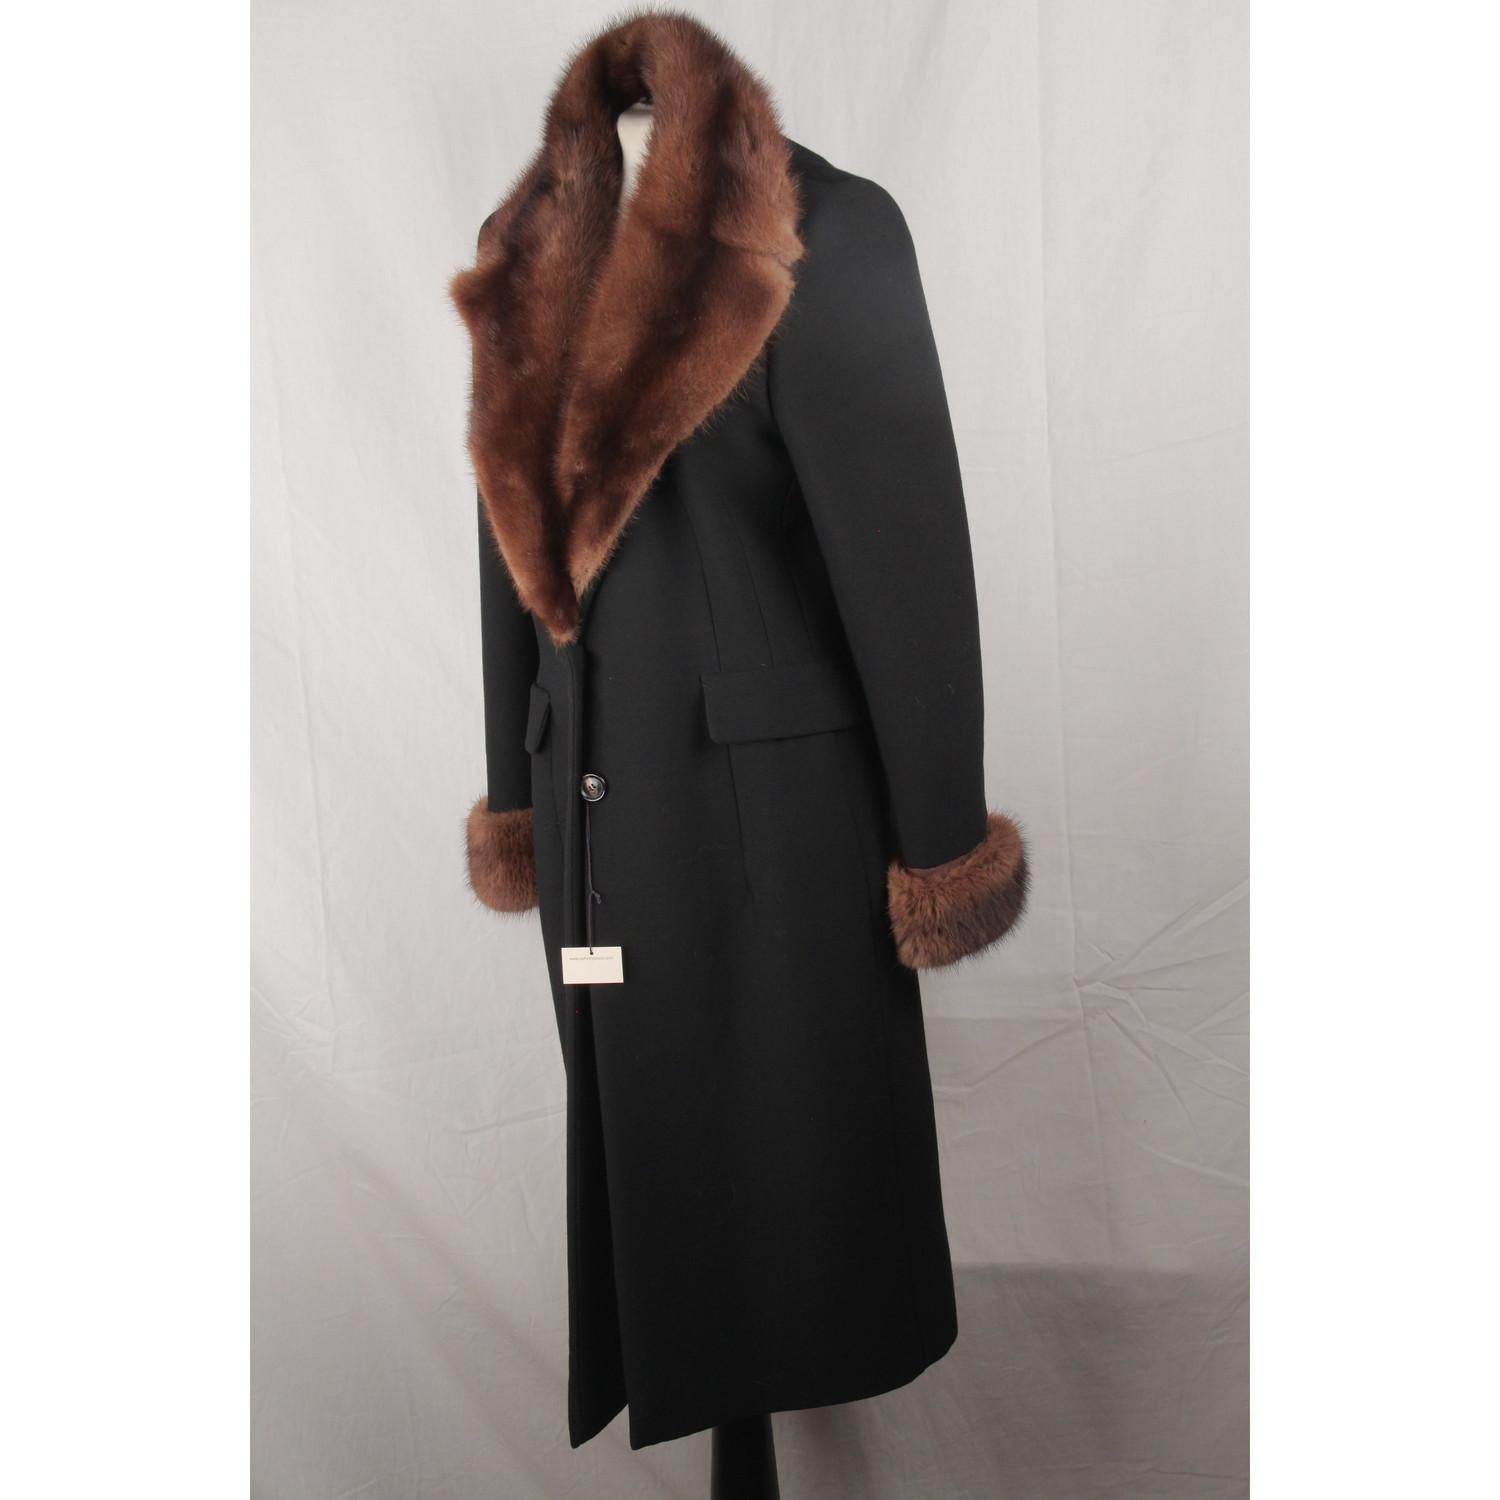 Les Copains Black Wool Tailored Coat with Mink Fur Trim Size 44 2